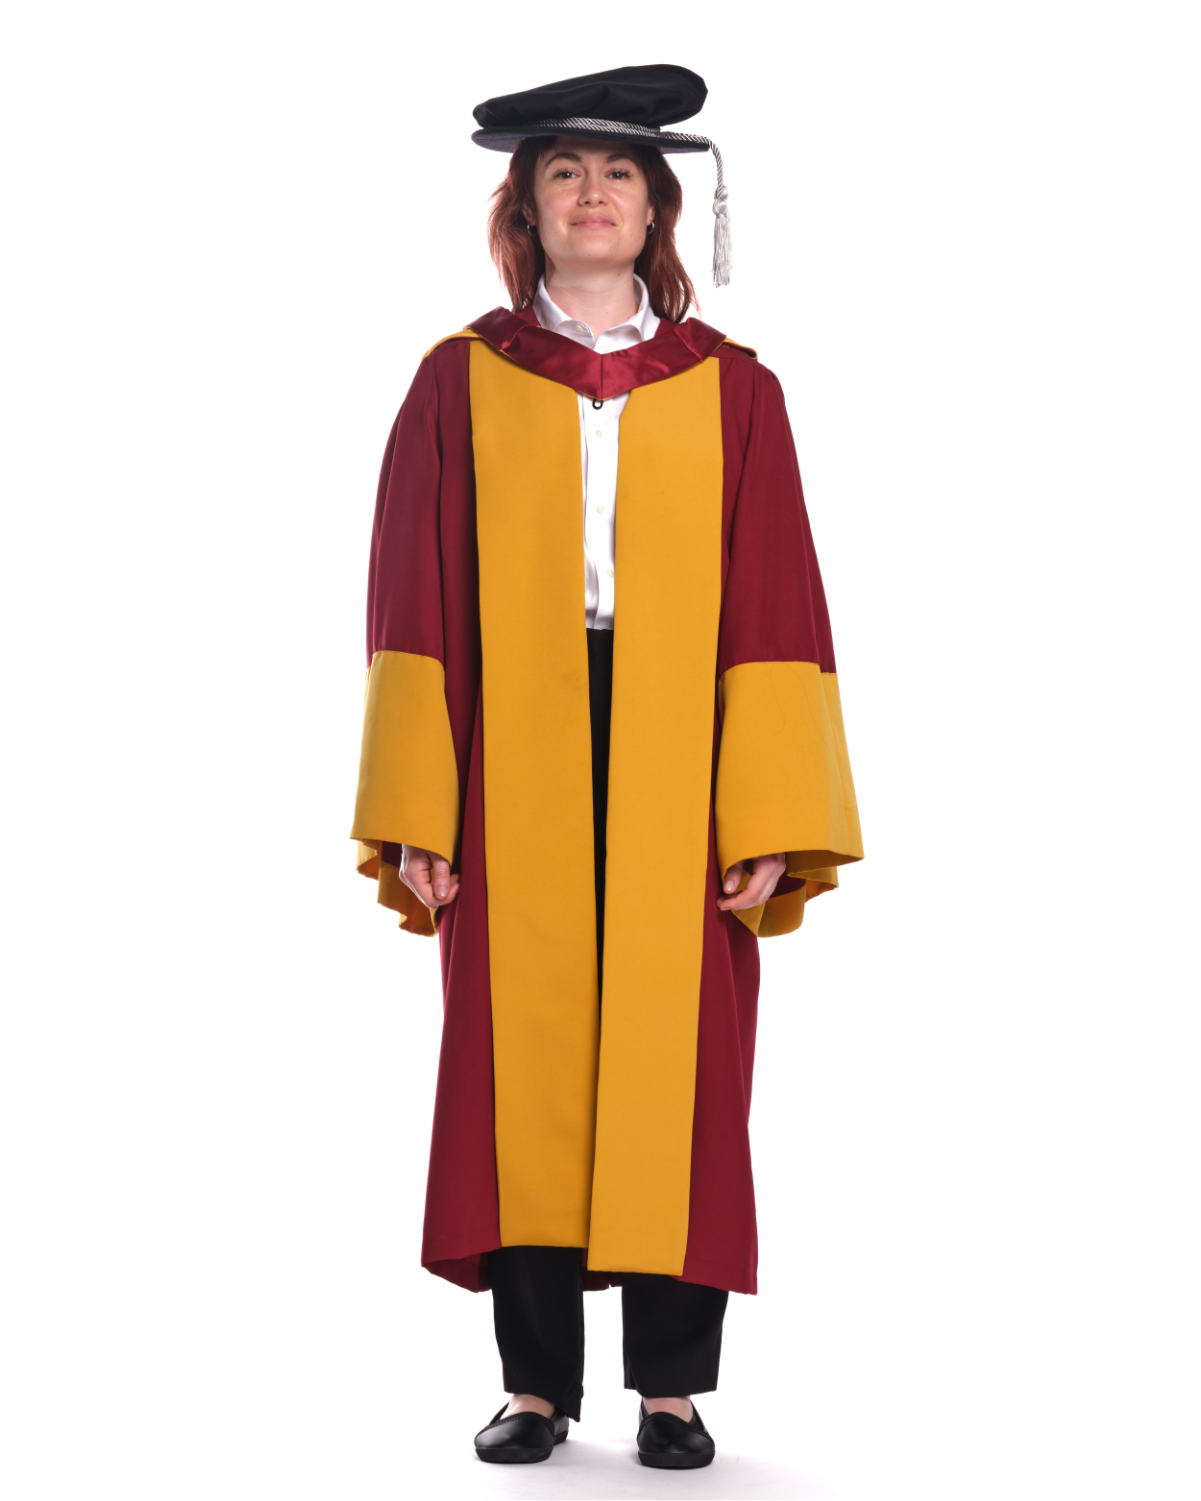 University of Bath | PhD Gown, Bonnet and Hood Set